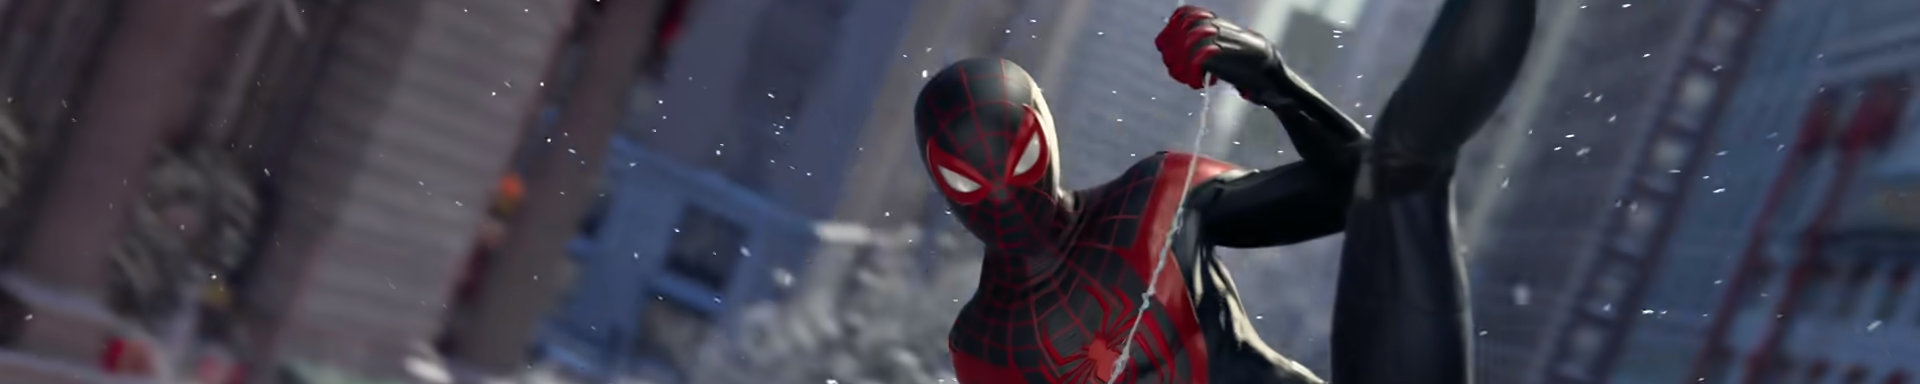 Spider-Man PS5 upgrade slice